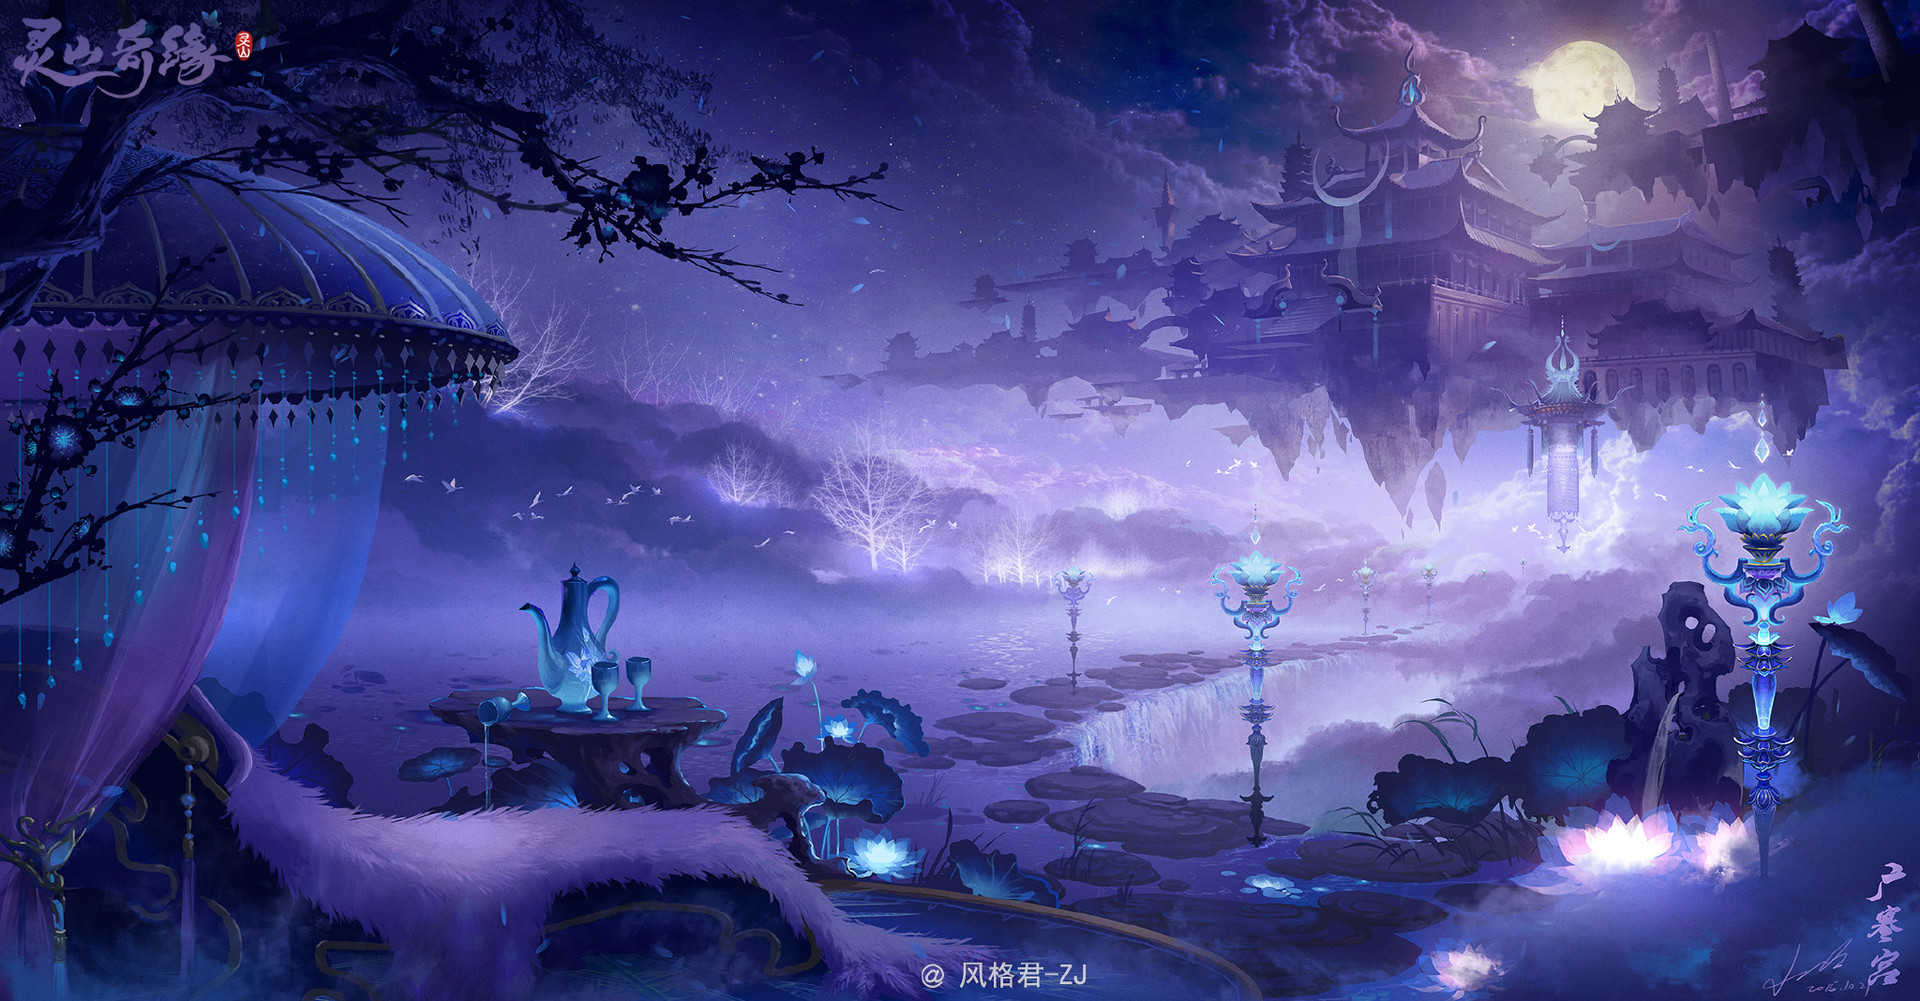 Jun Zhang Fantasy Art Digital Art Asian Architecture Landscape Fantasy City Blue Purple Trees Clouds 1920x1001